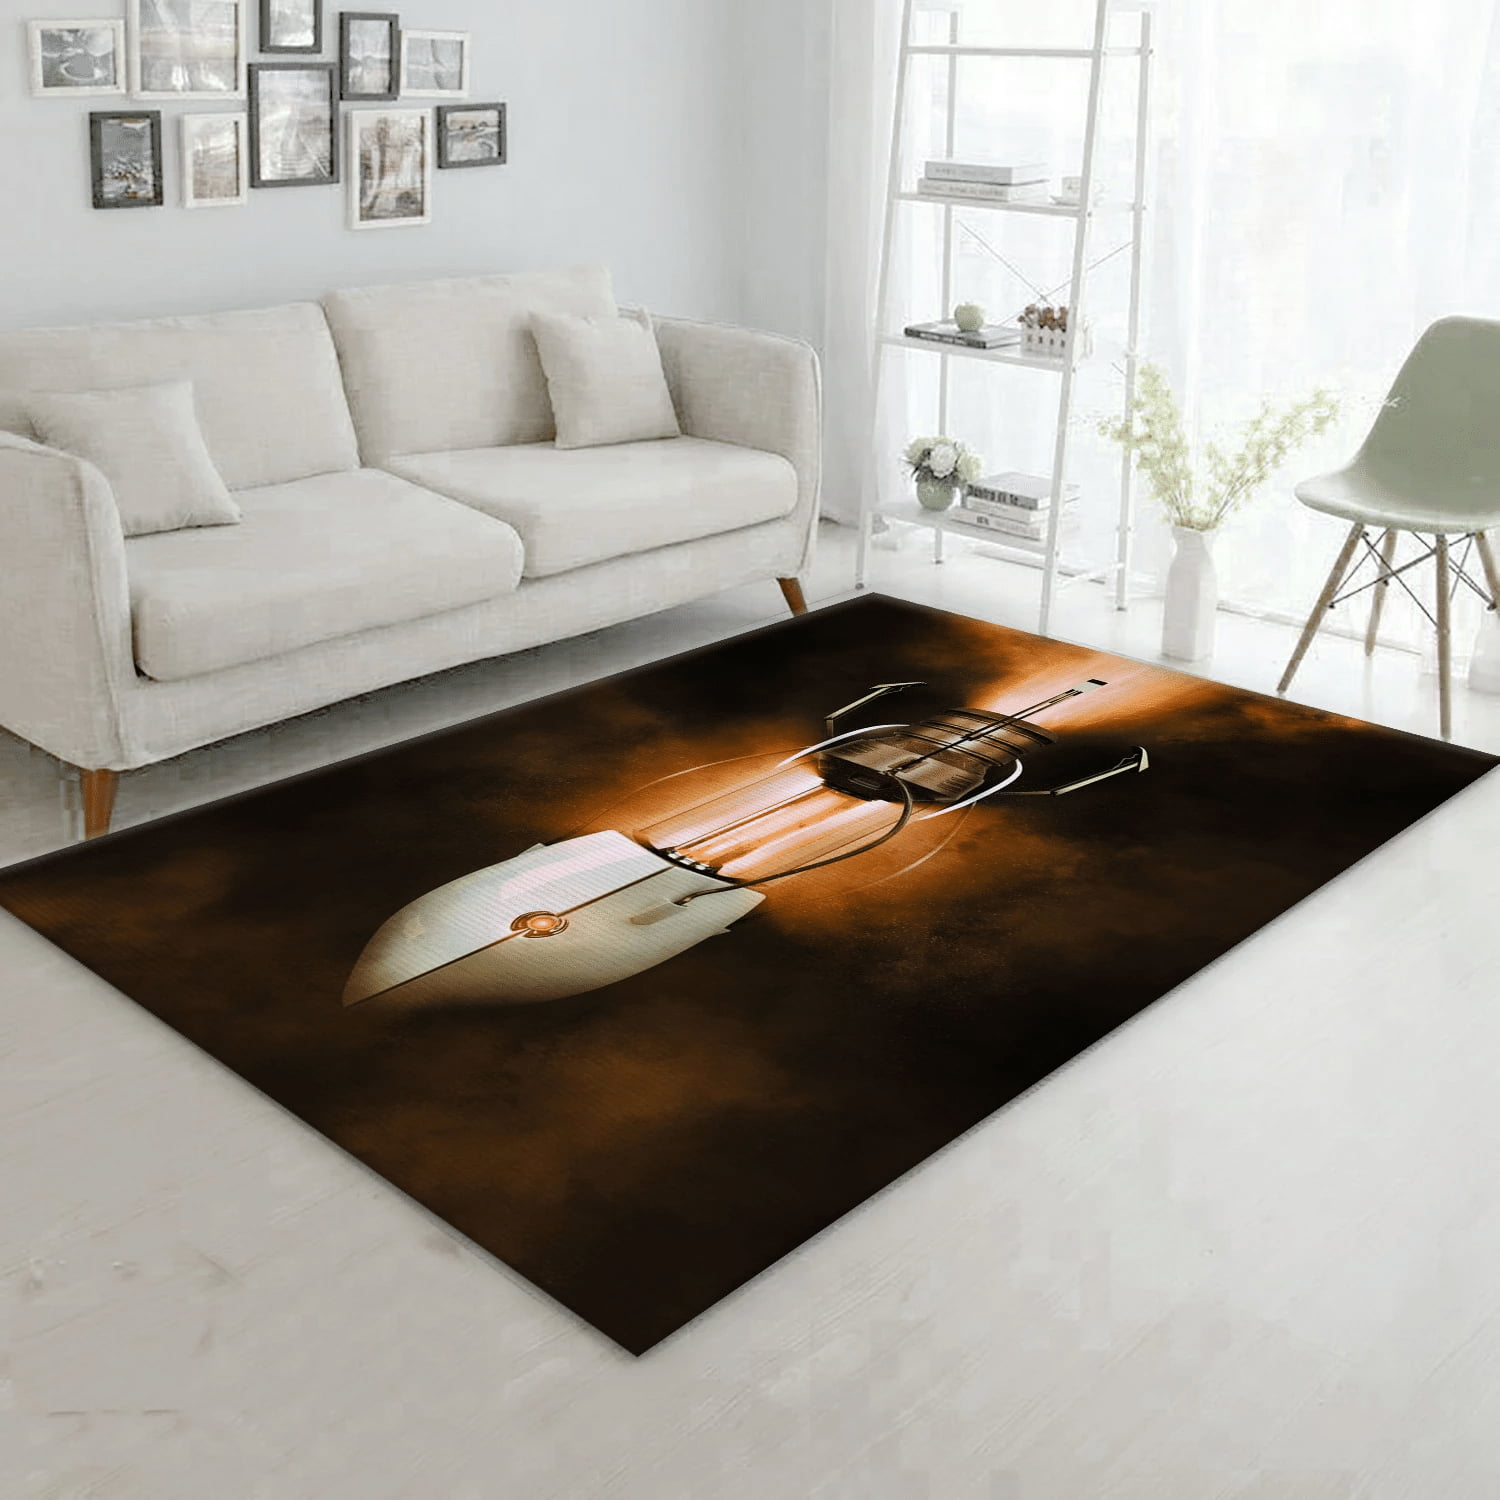 3d Portal Gun Orange Area Rug Carpet